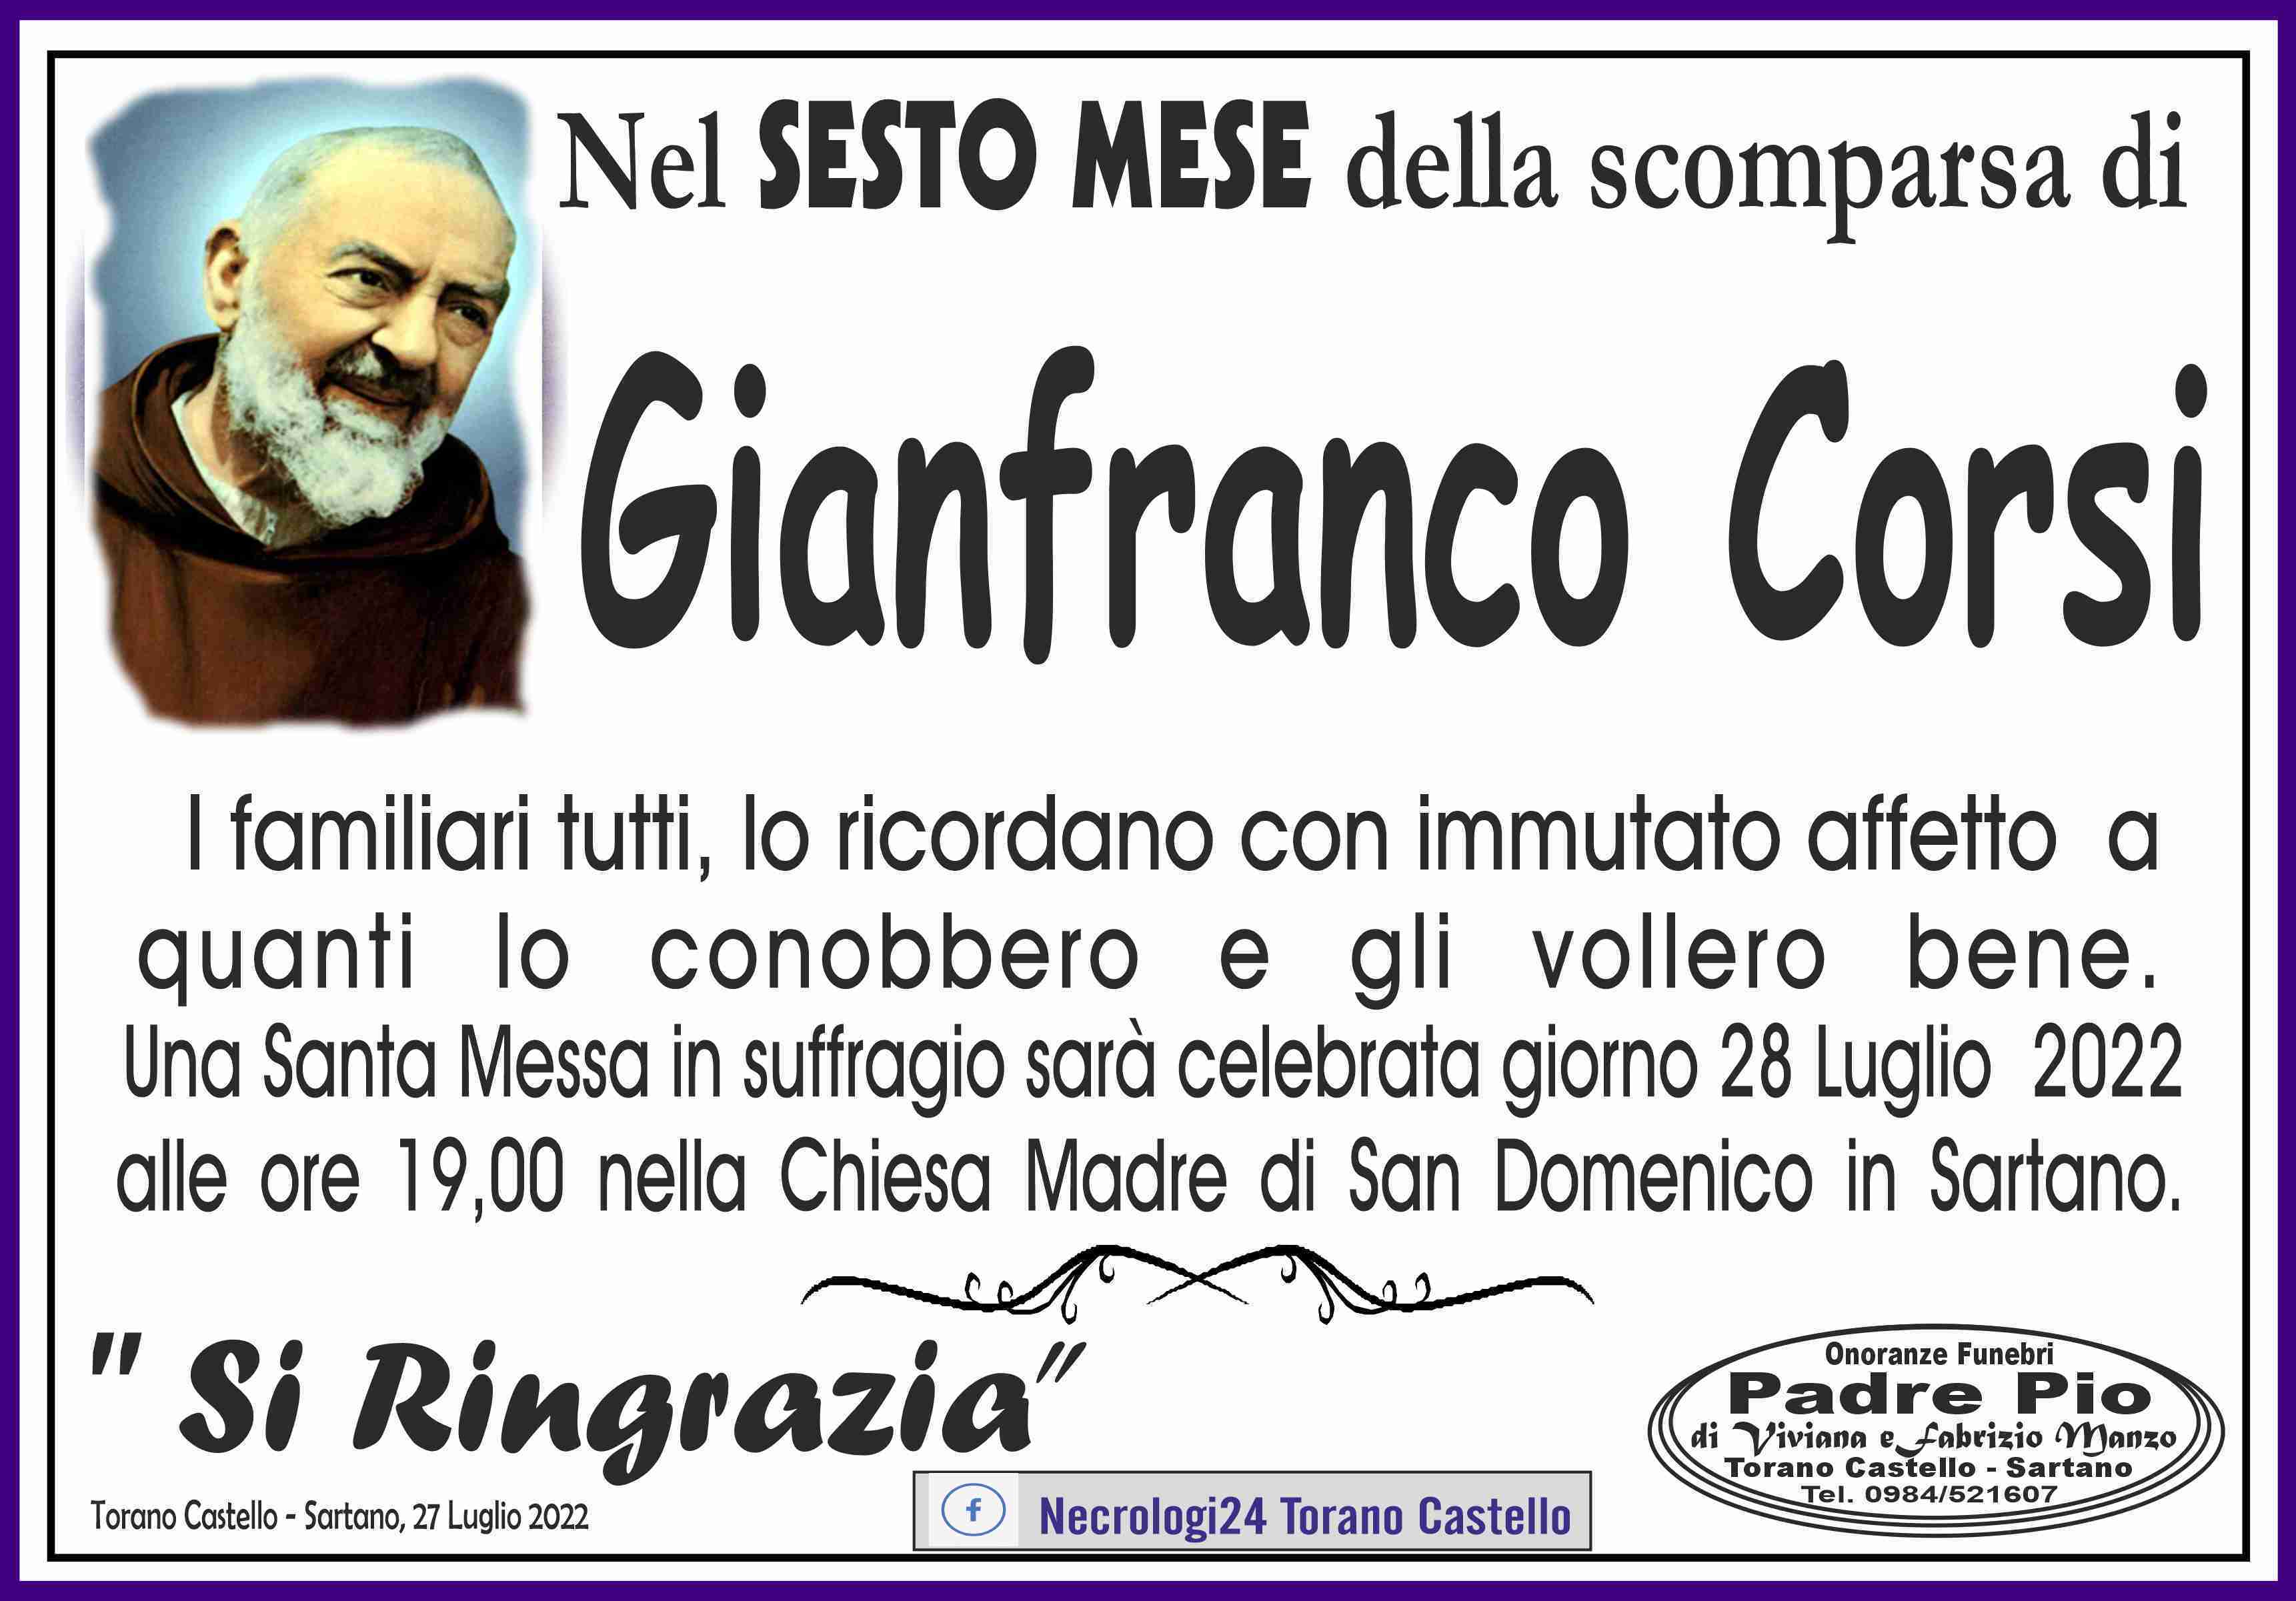 Gianfranco Corsi